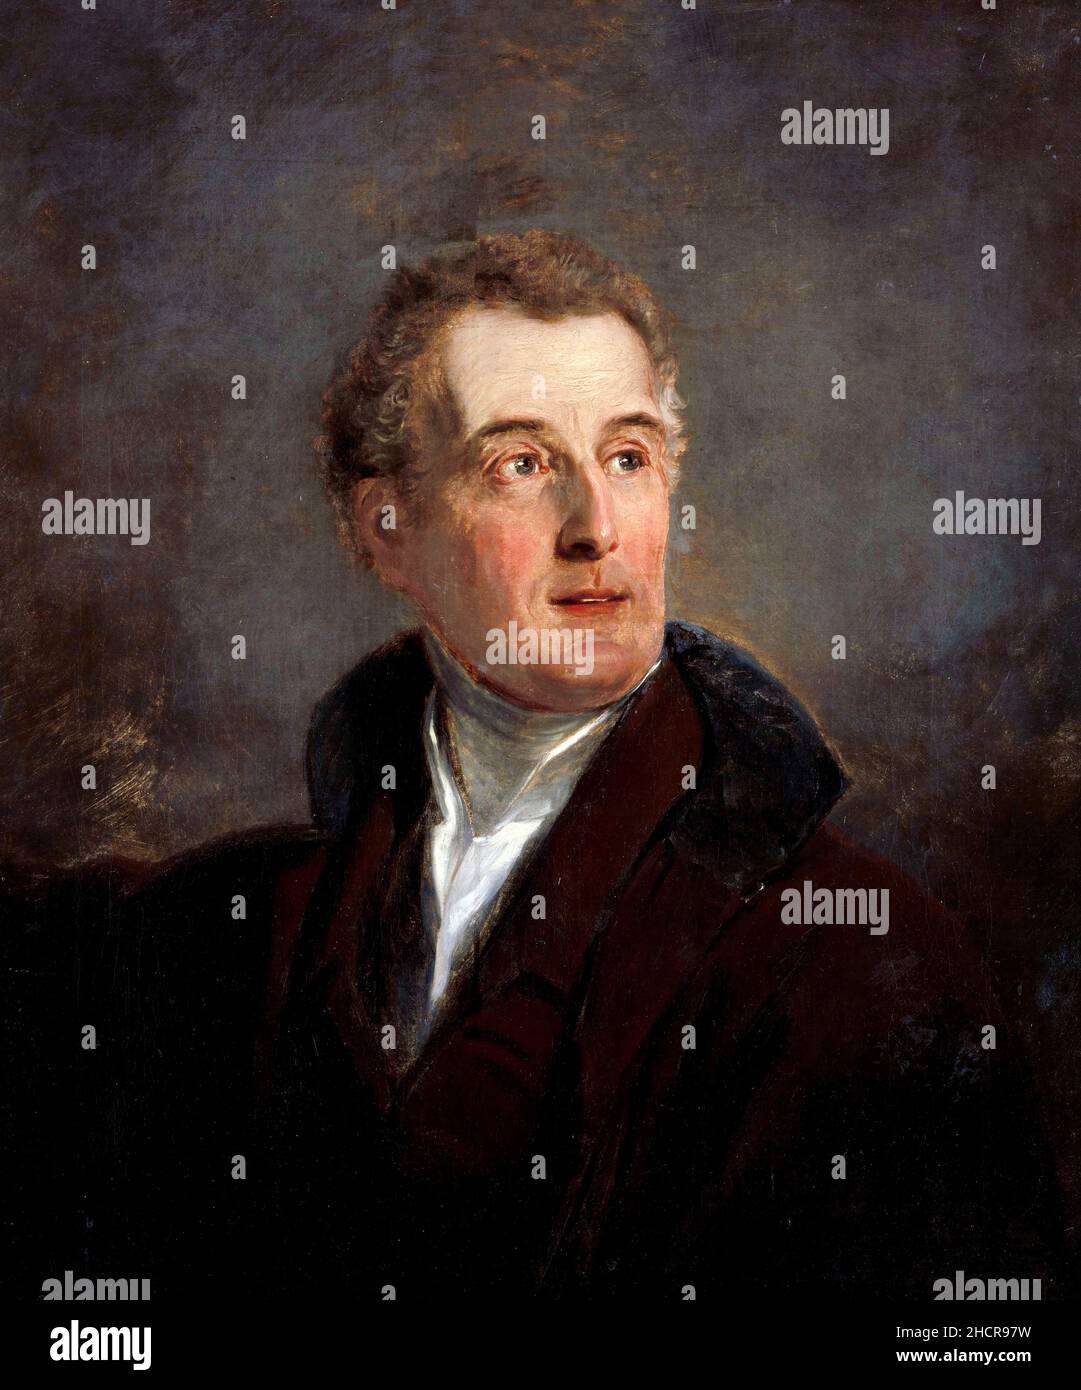 Portrait Study of Arthur Wellesley, Duke of Wellington von Jan Willem Pieneman (1779-1853), Öl auf Leinwand, 1821. Stockfoto